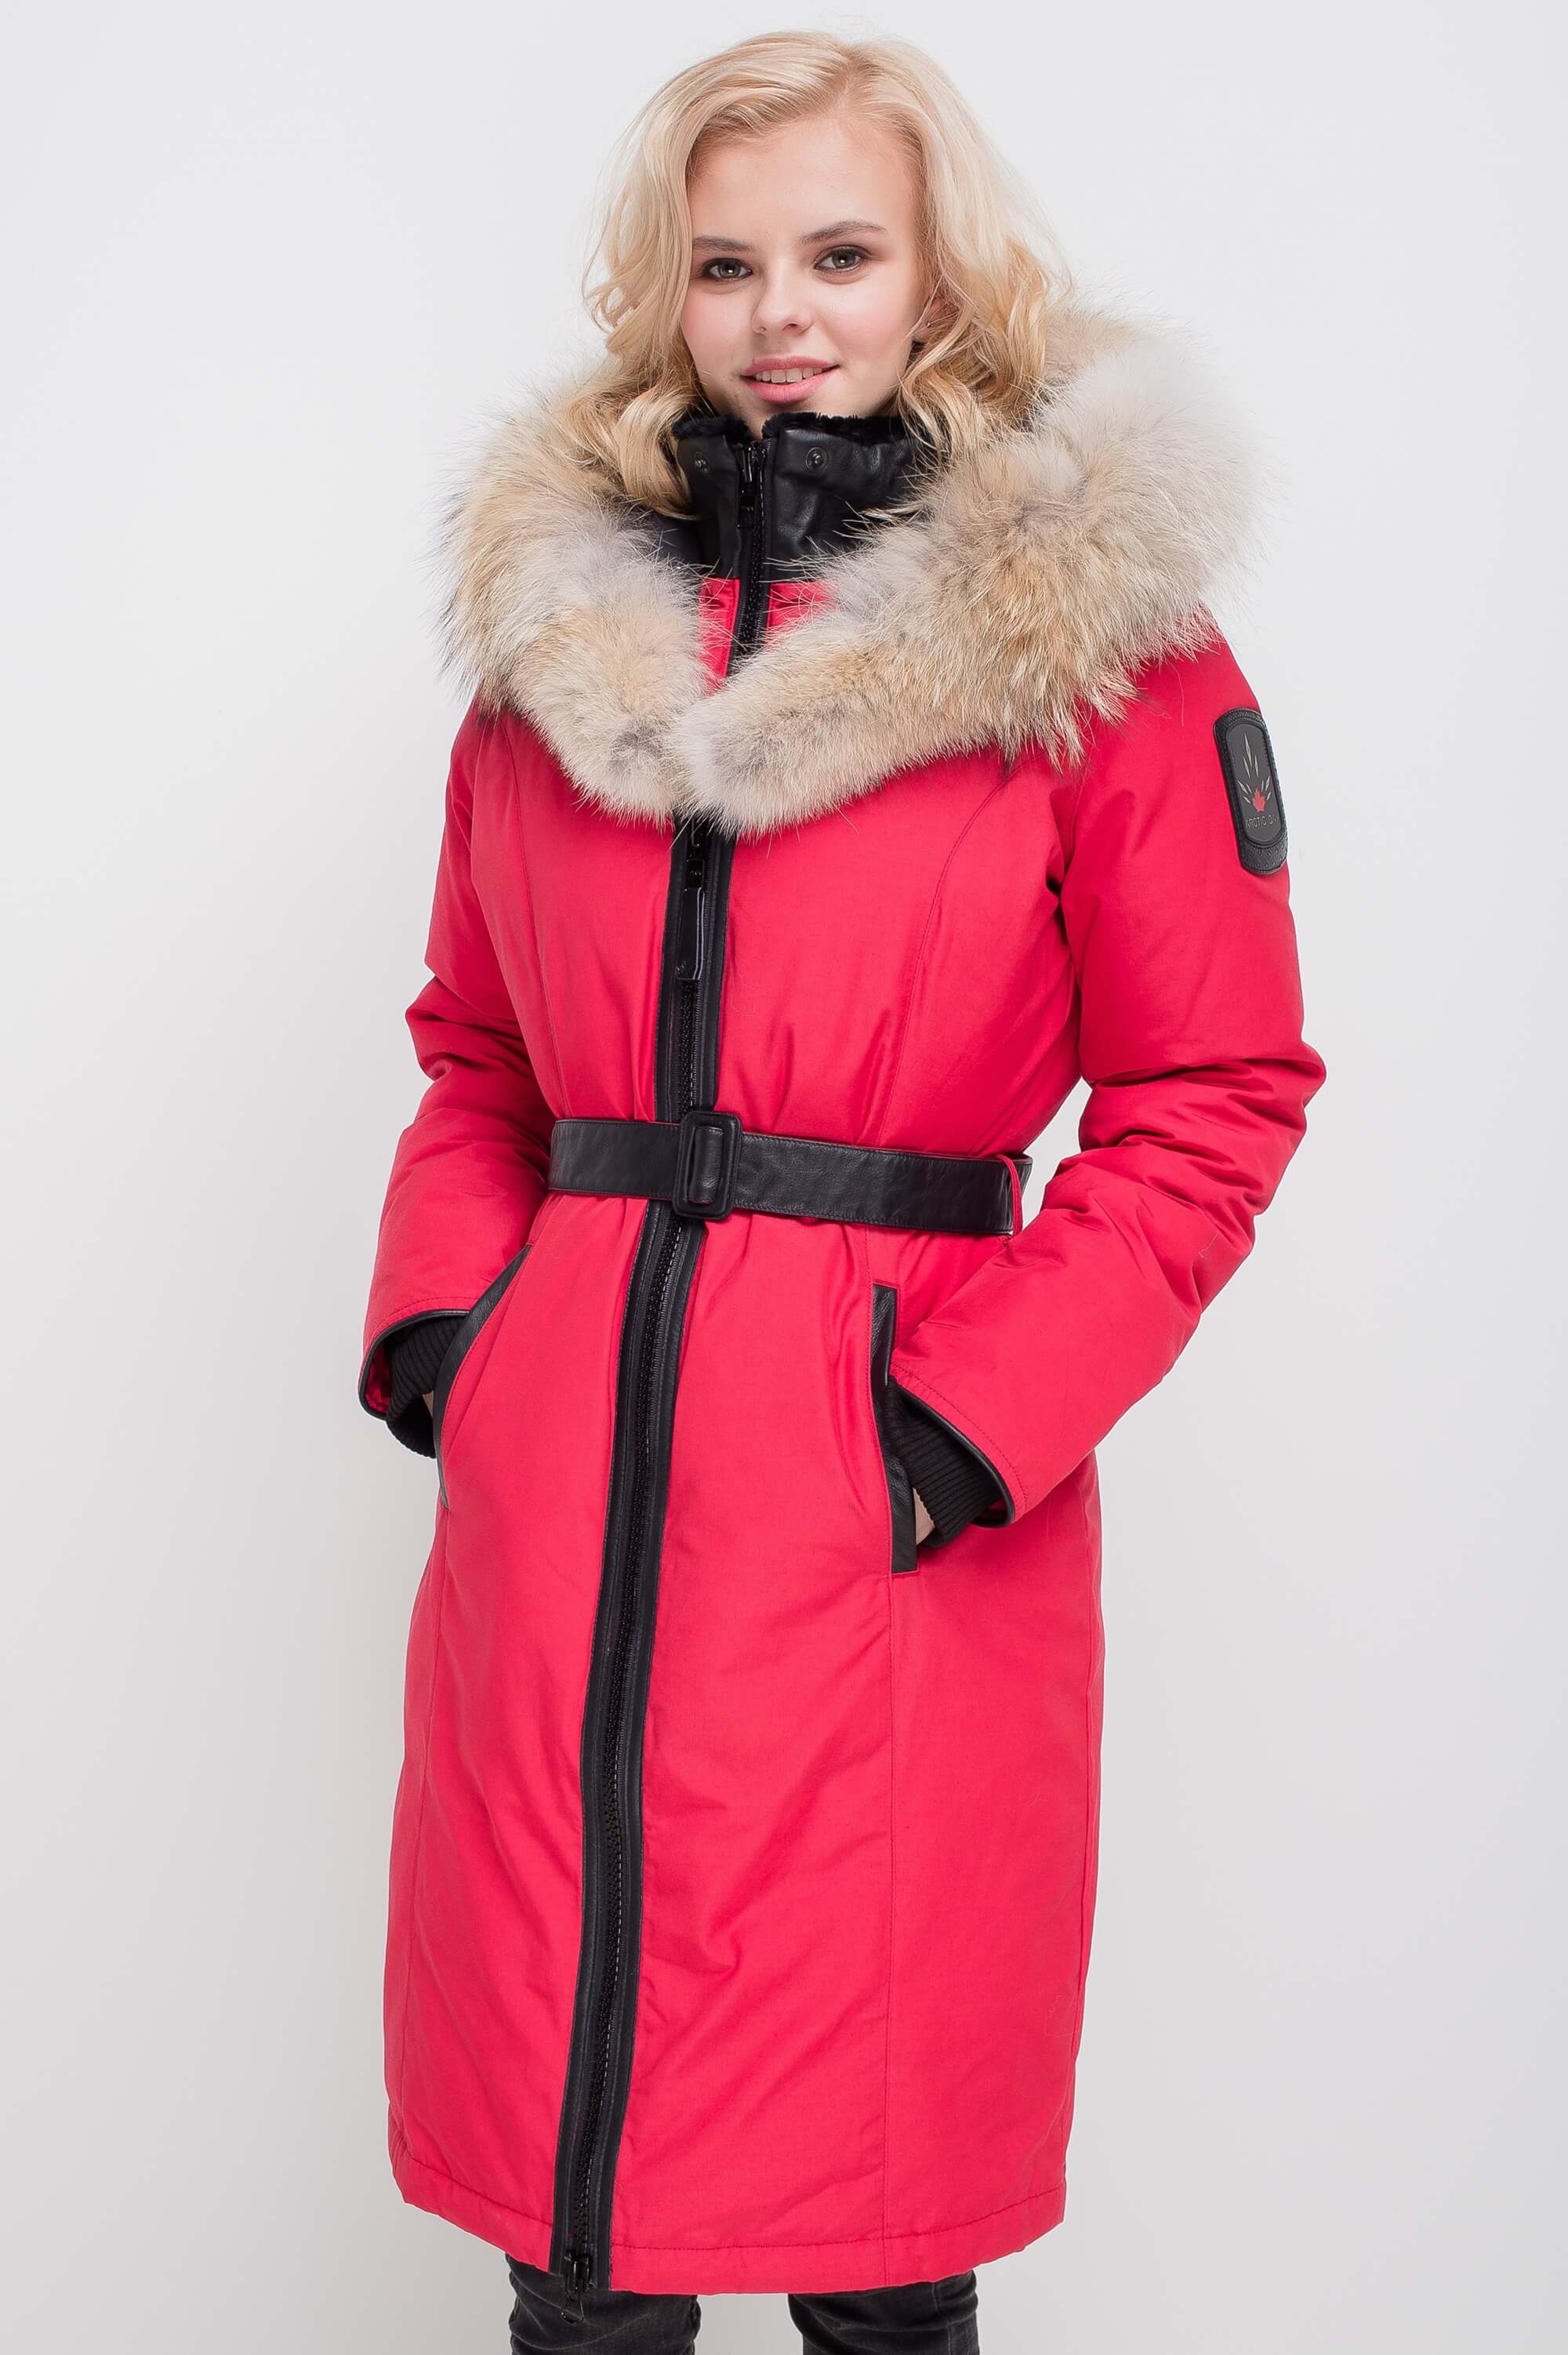 Women's Coats, Winter Coats For Women